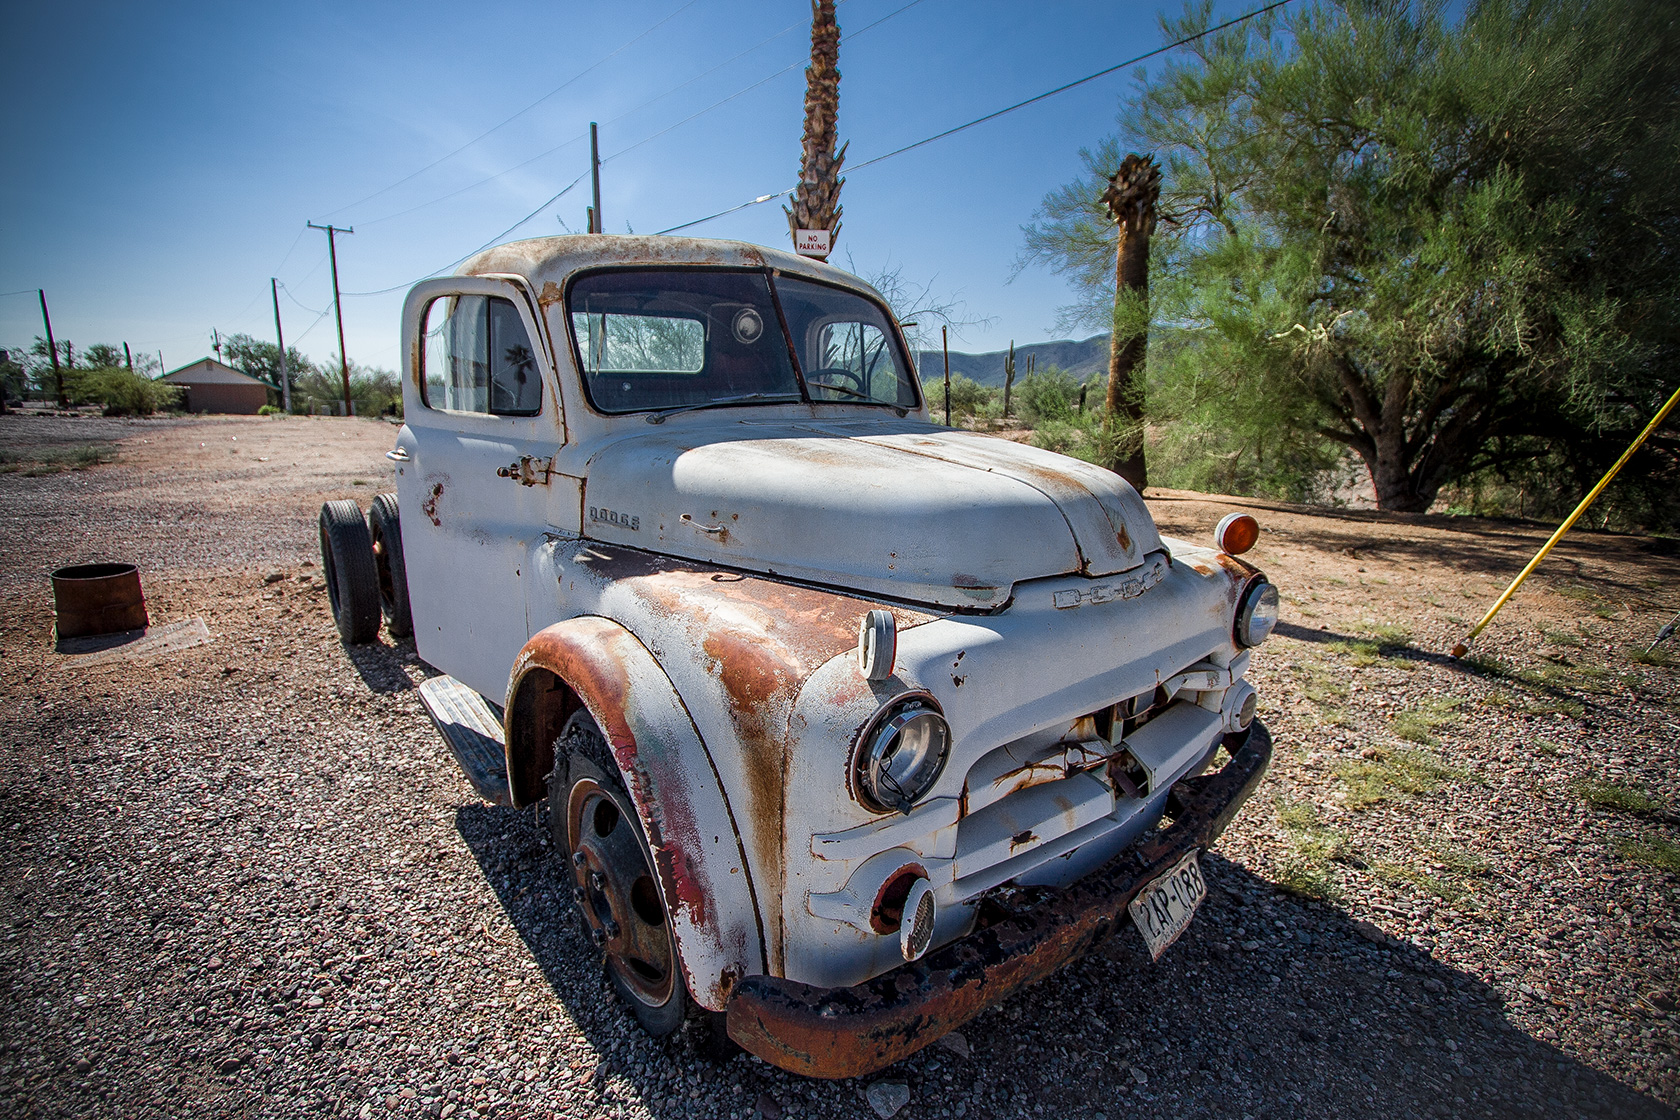 Abandoned truck in an abandoned desert village